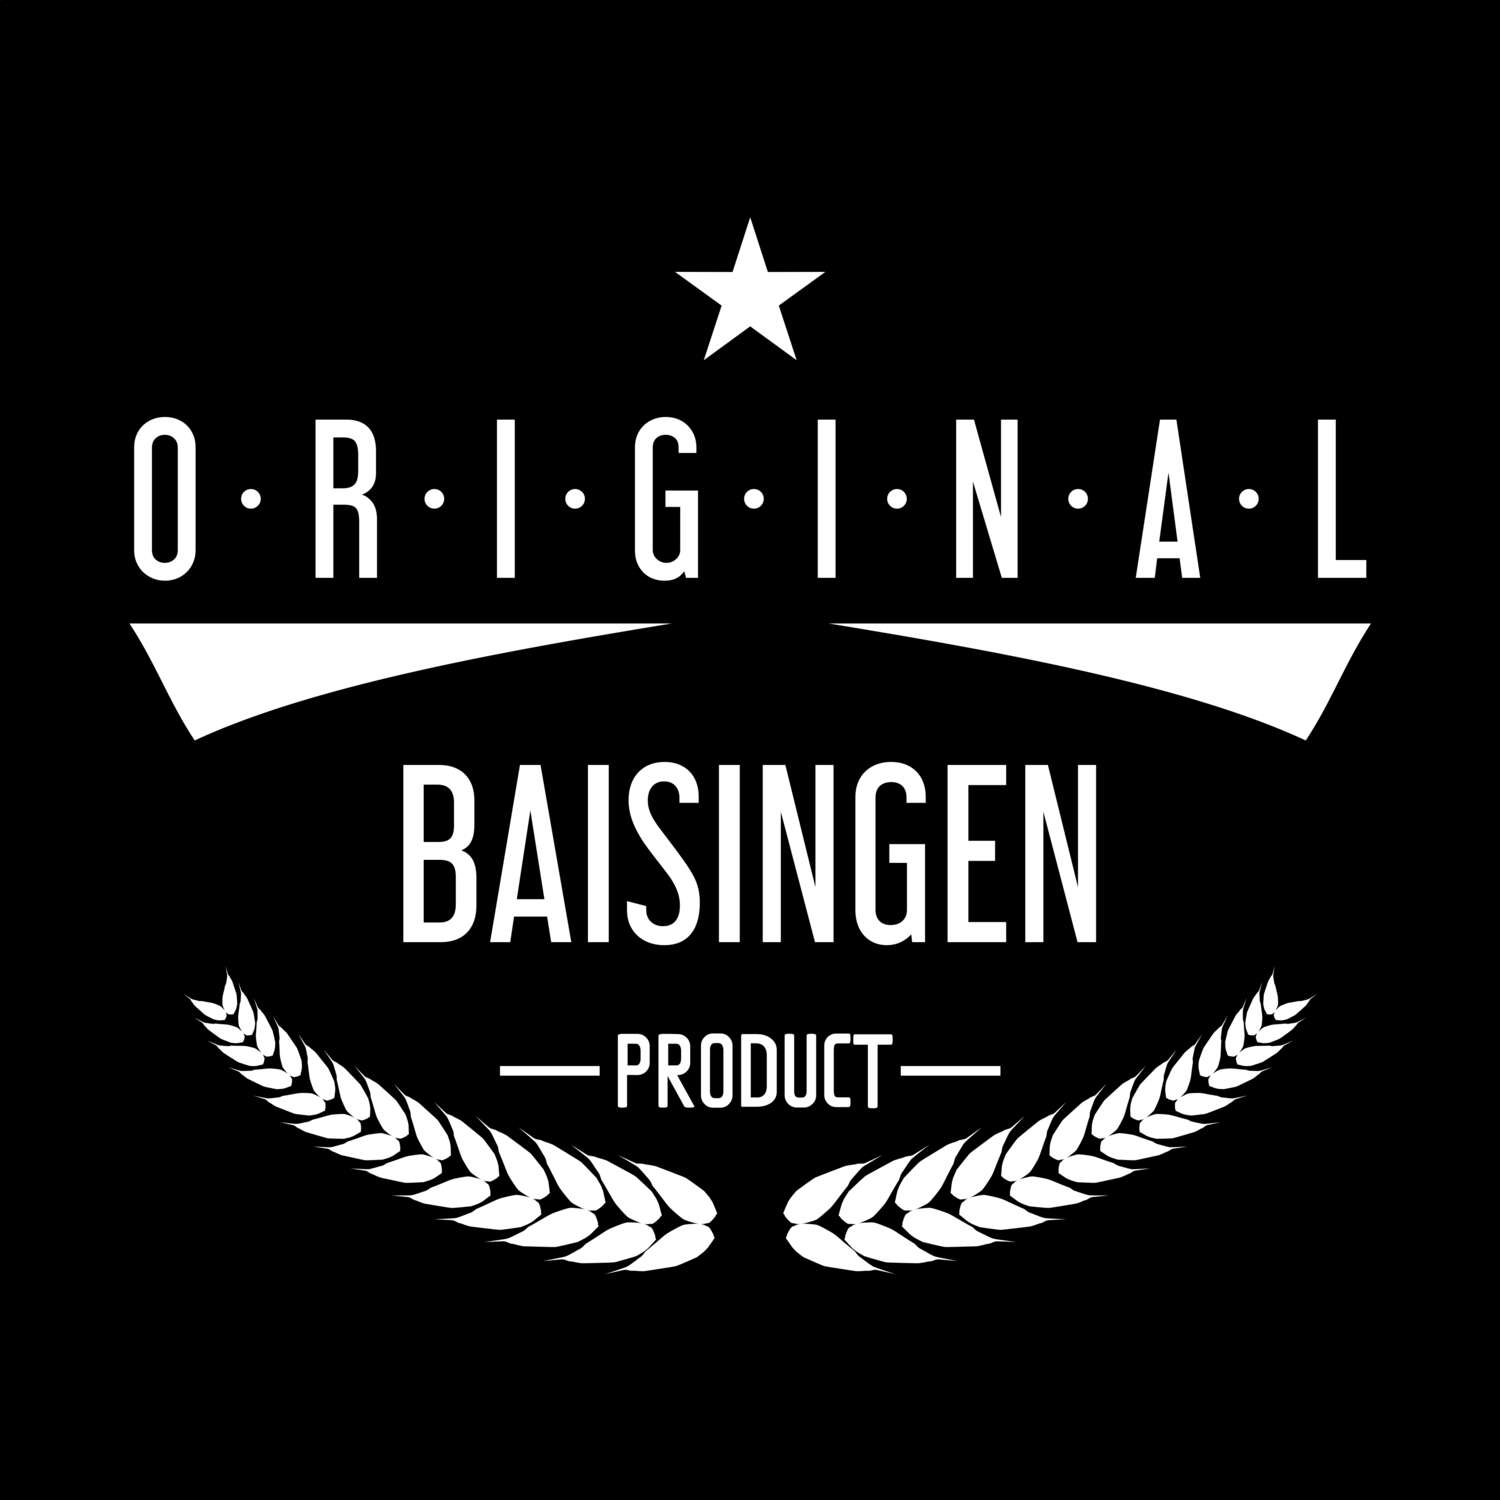 Baisingen T-Shirt »Original Product«